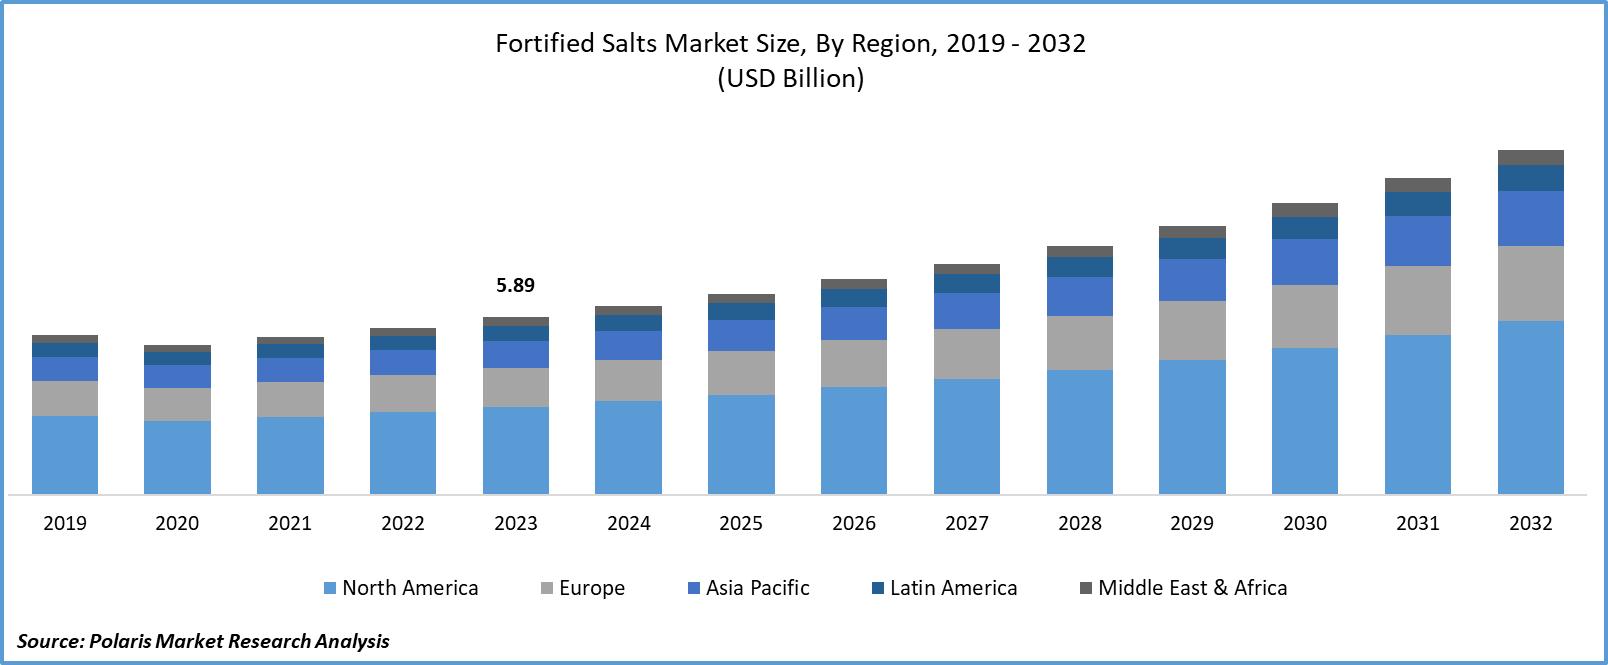 Fortified Salts Market Size